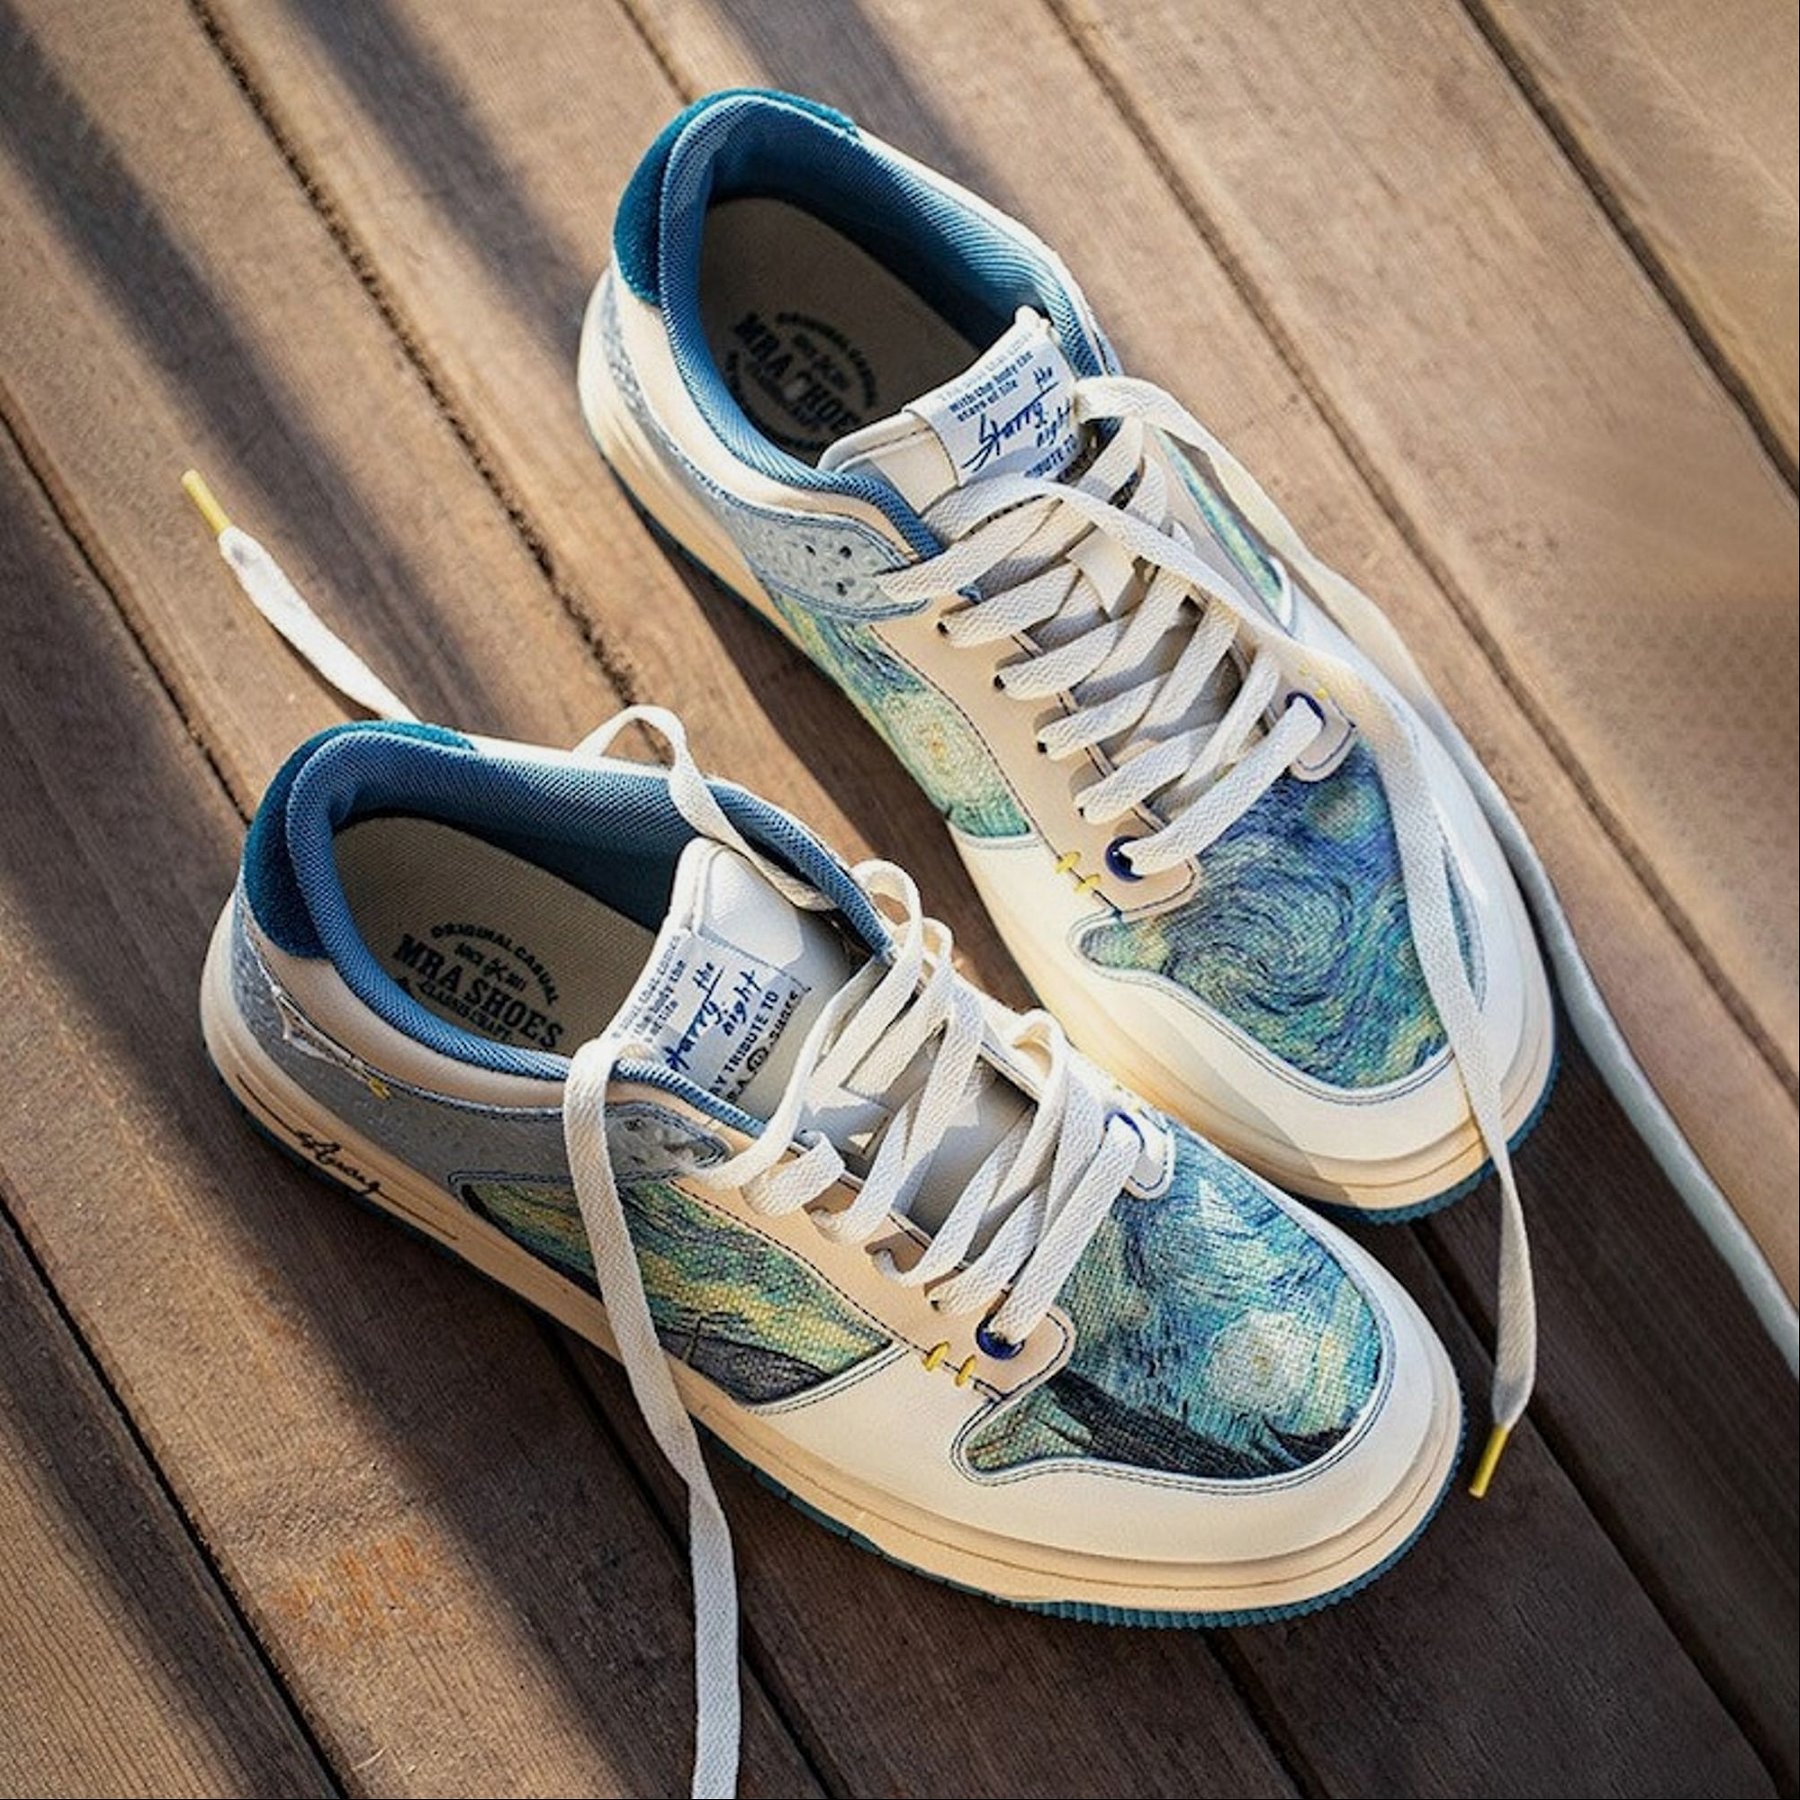 Starry Night by Van Gogh inspired sneakers